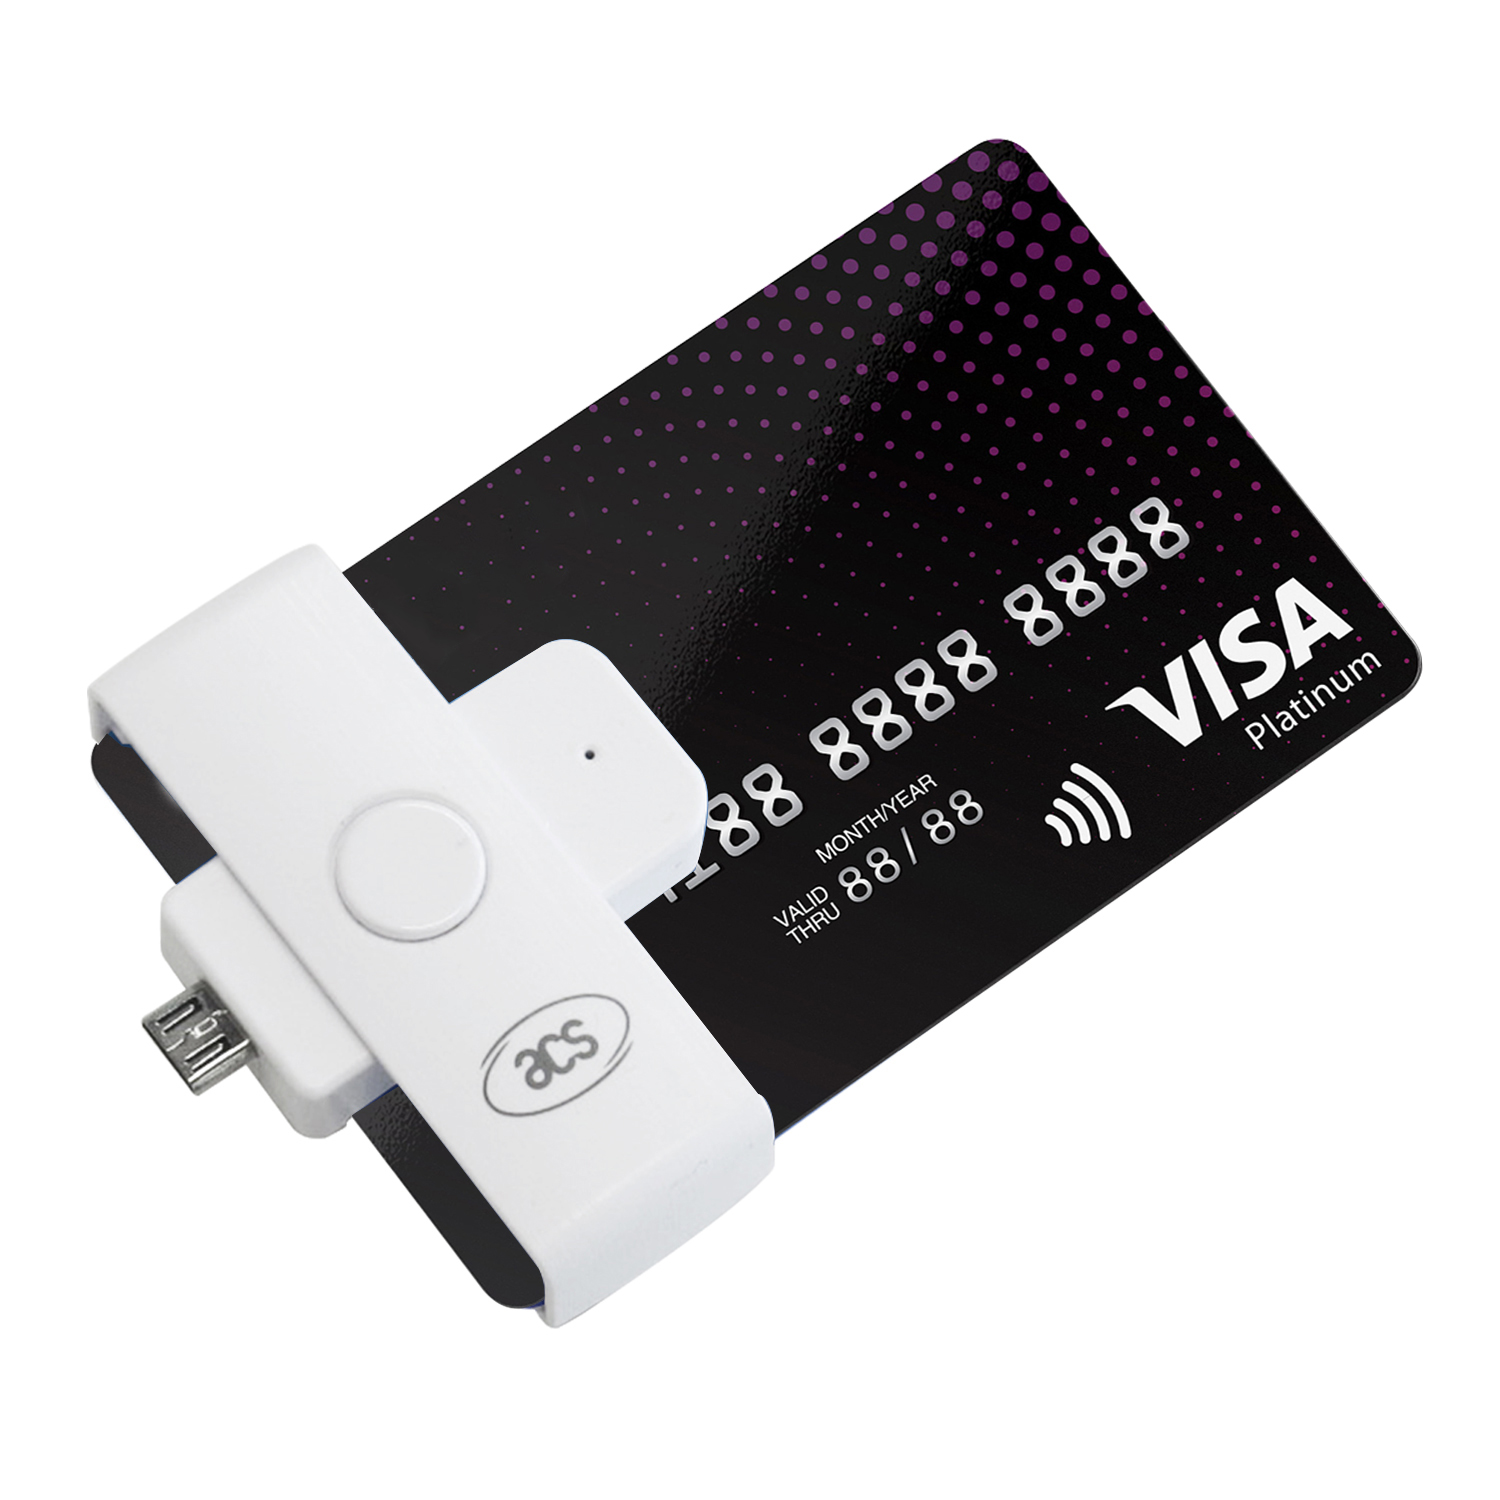 ACS ISO7816 EMV UnionPay Portable Contact Smart Card Reader For E-Payment ACR39U-ND